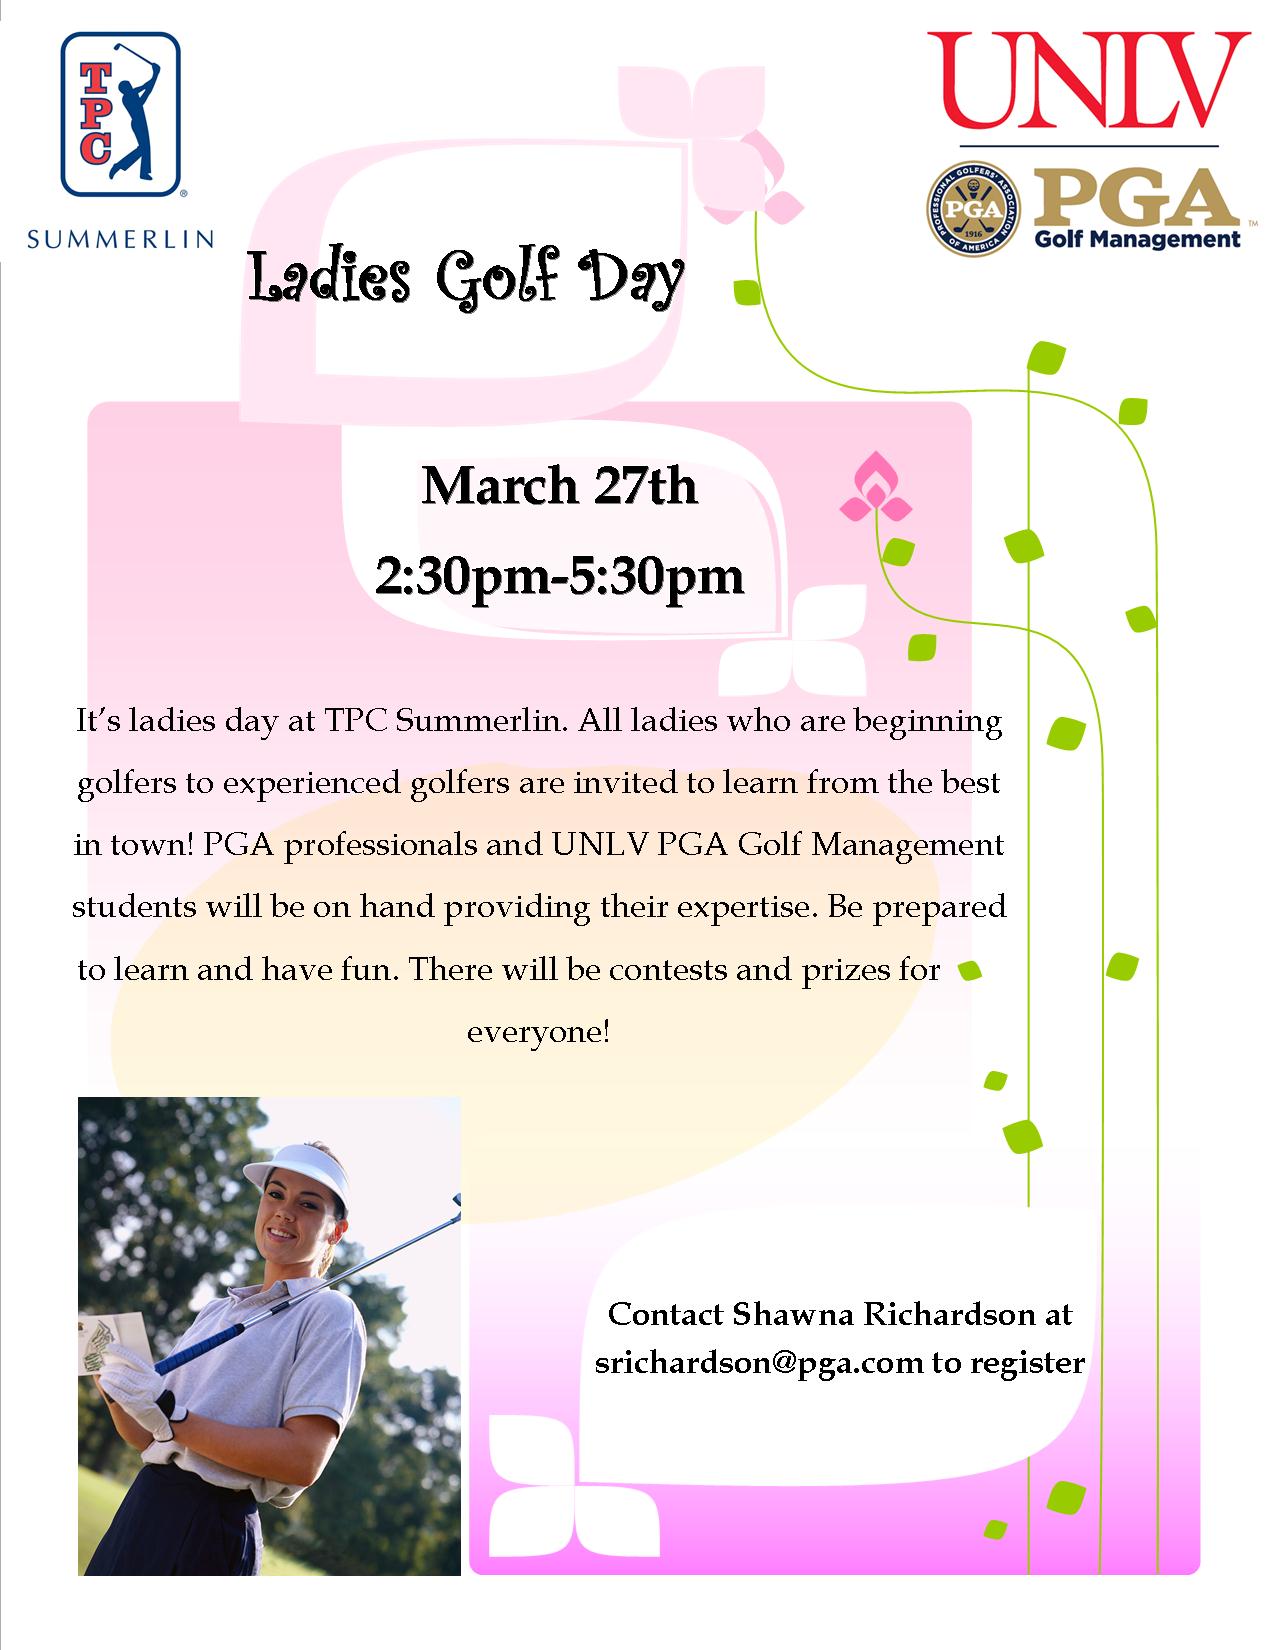 Ladies Golf Day Calendar University of Nevada, Las Vegas